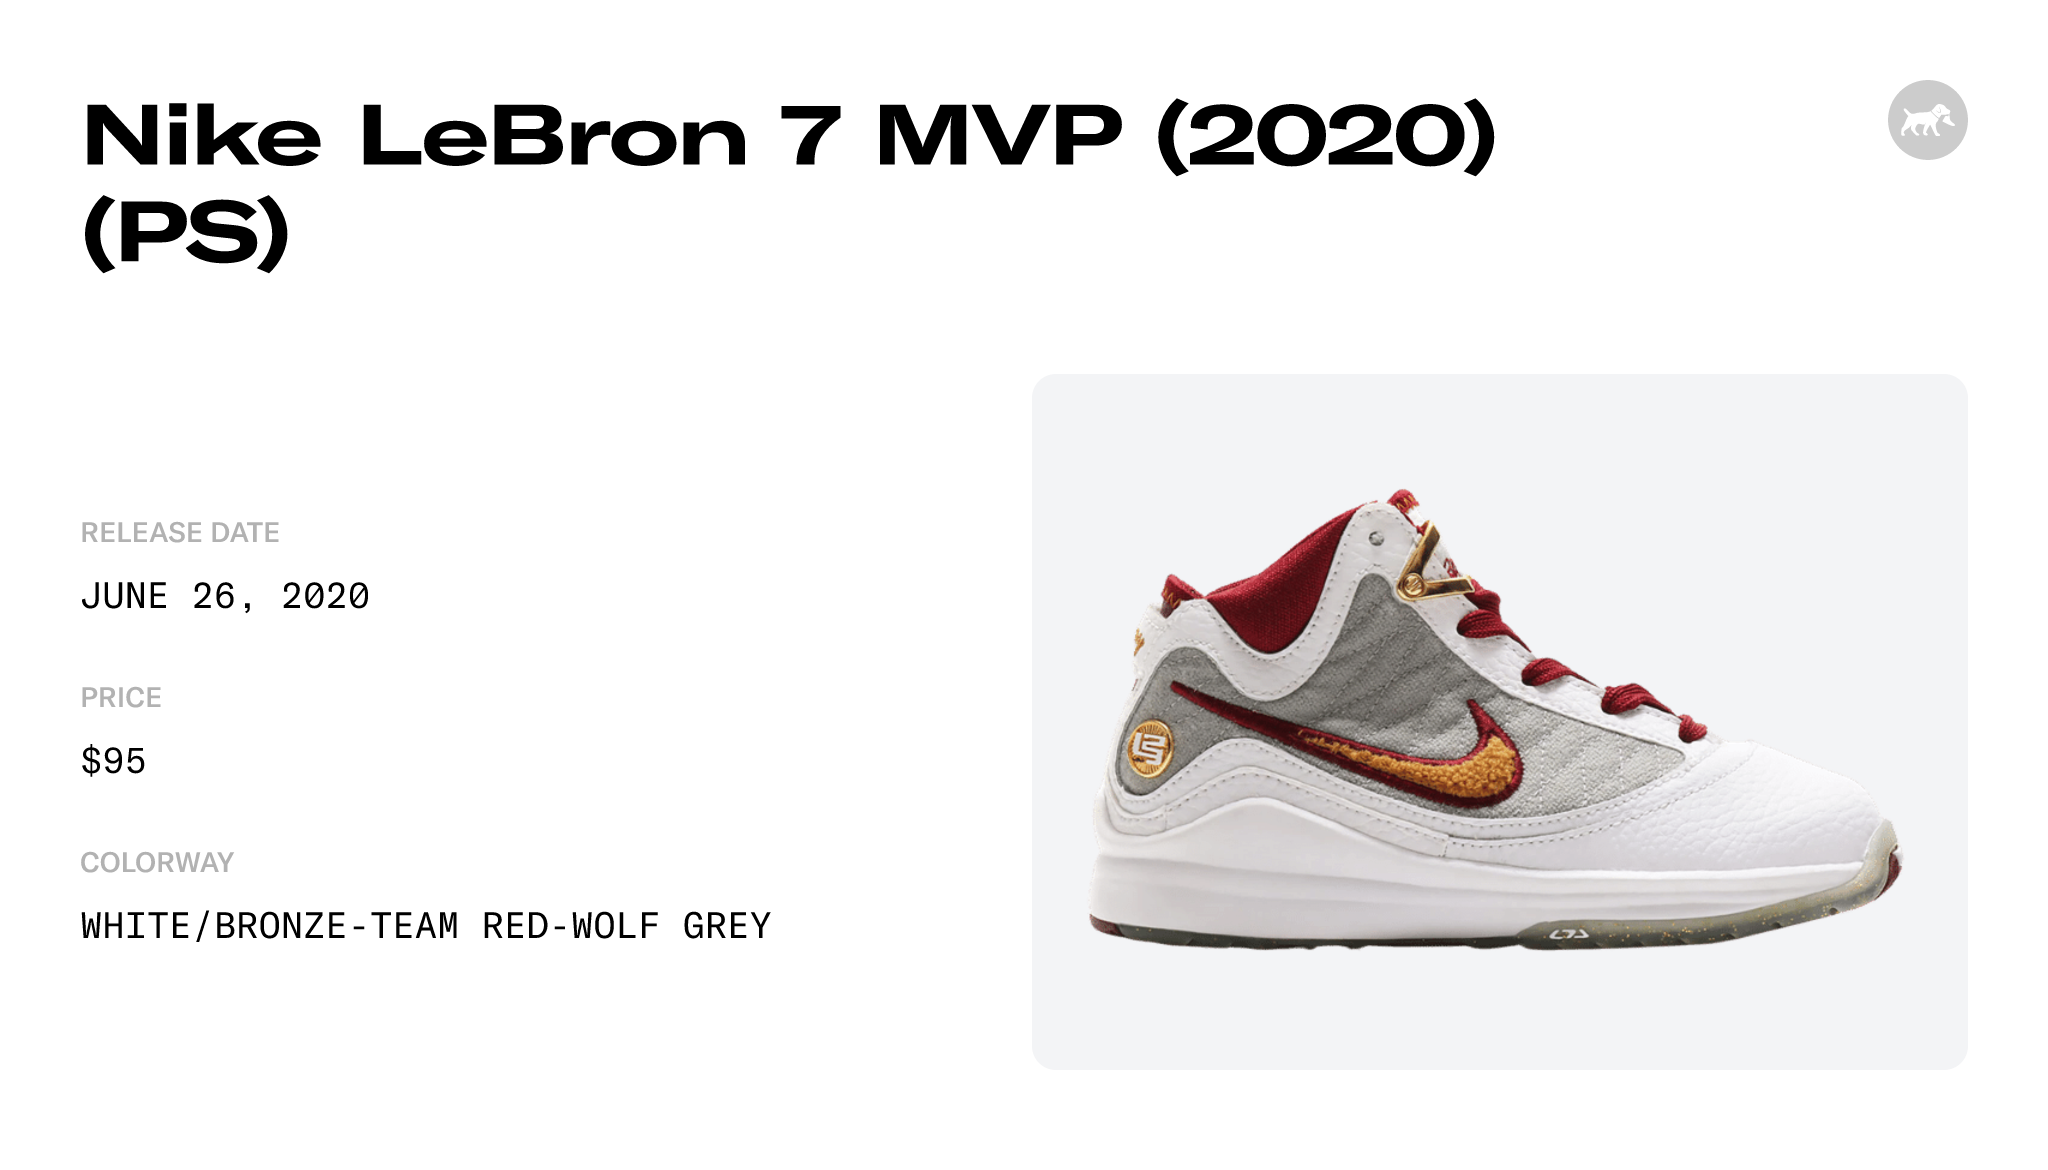 Nike LeBron 7 MVP (2020) (PS) - CZ8889-100 Raffles and Release Date